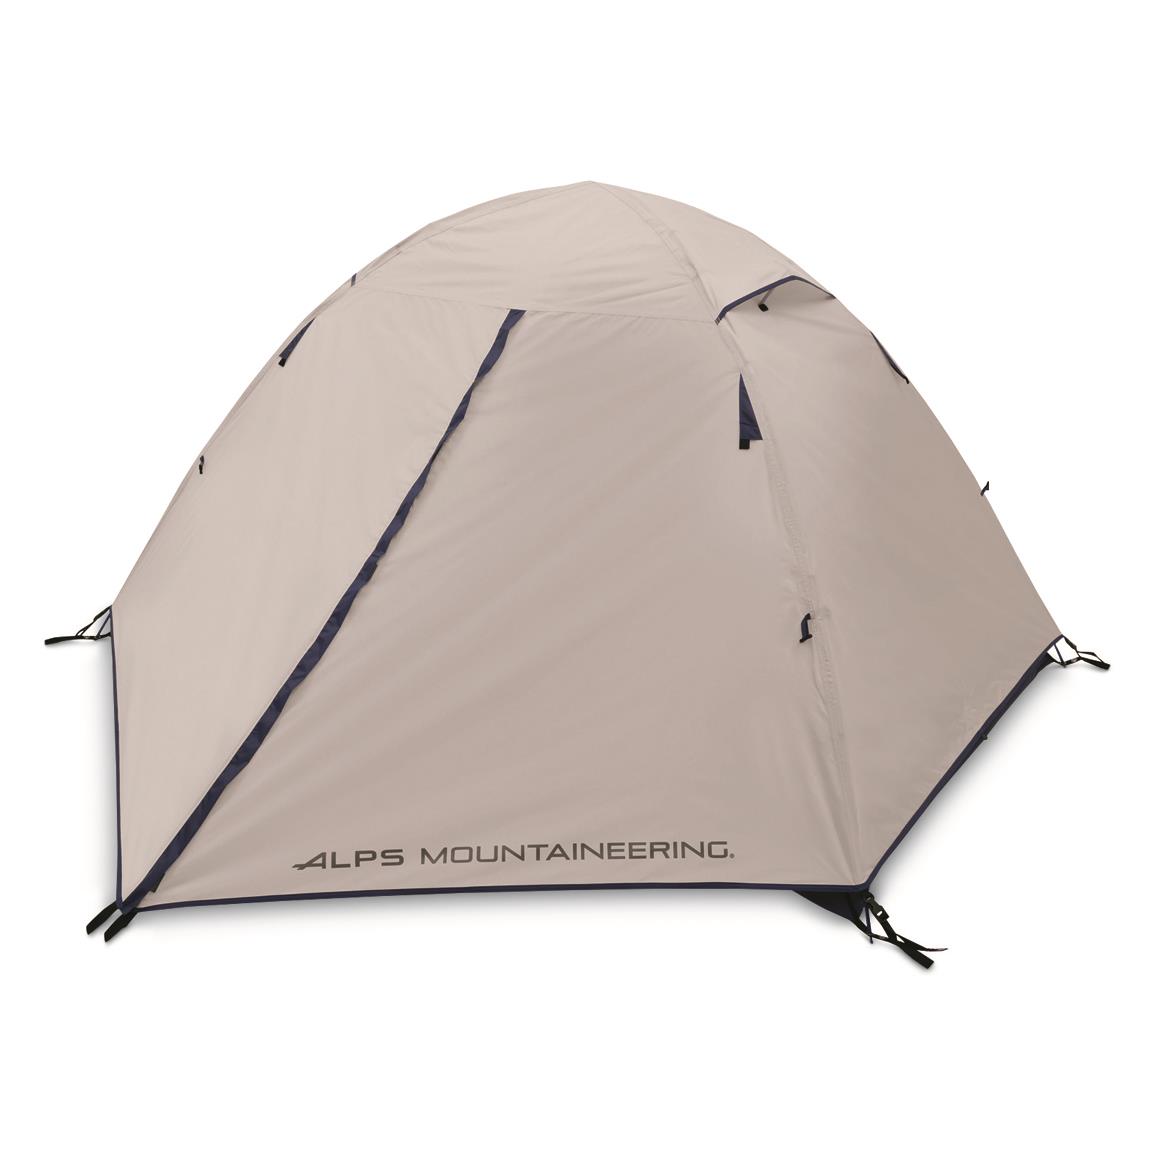 2-person Tent